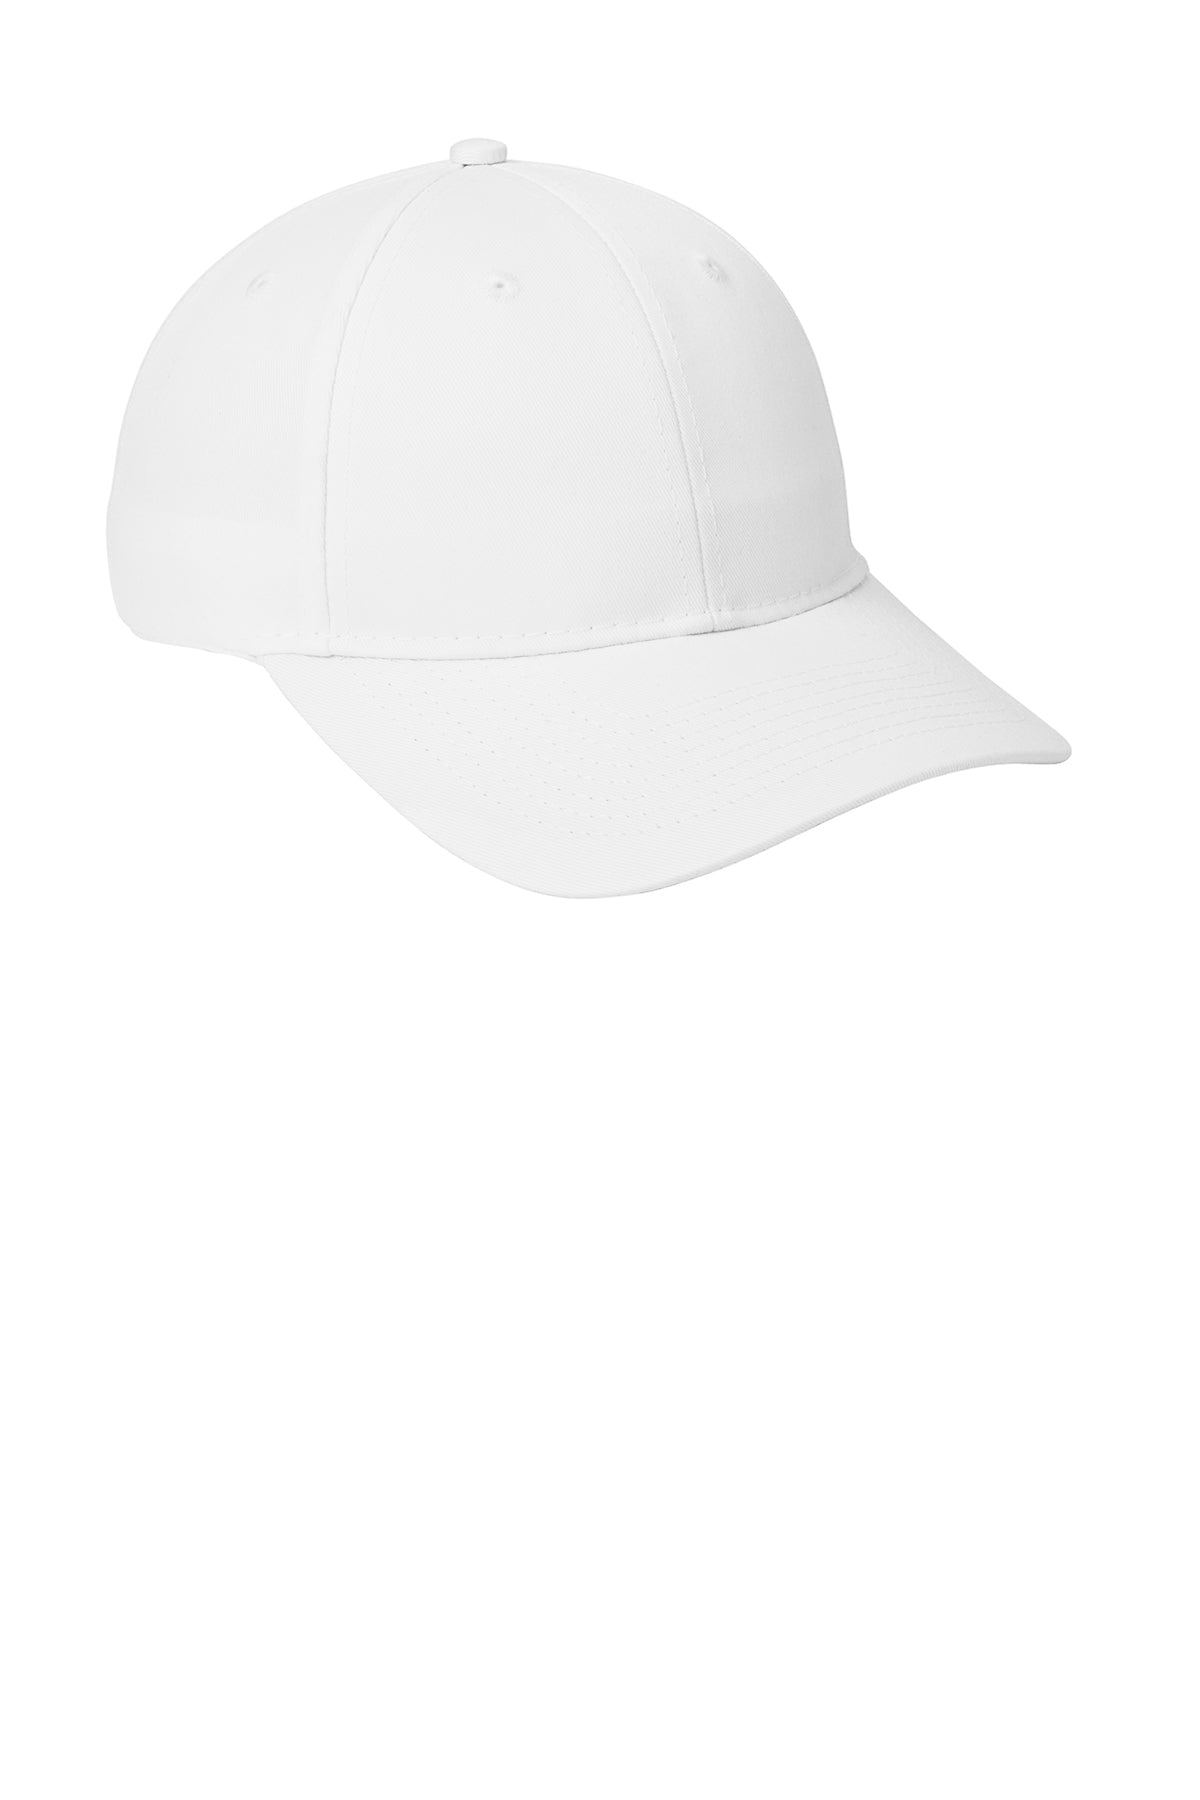 Port Authority Easy Care Customized Caps, White